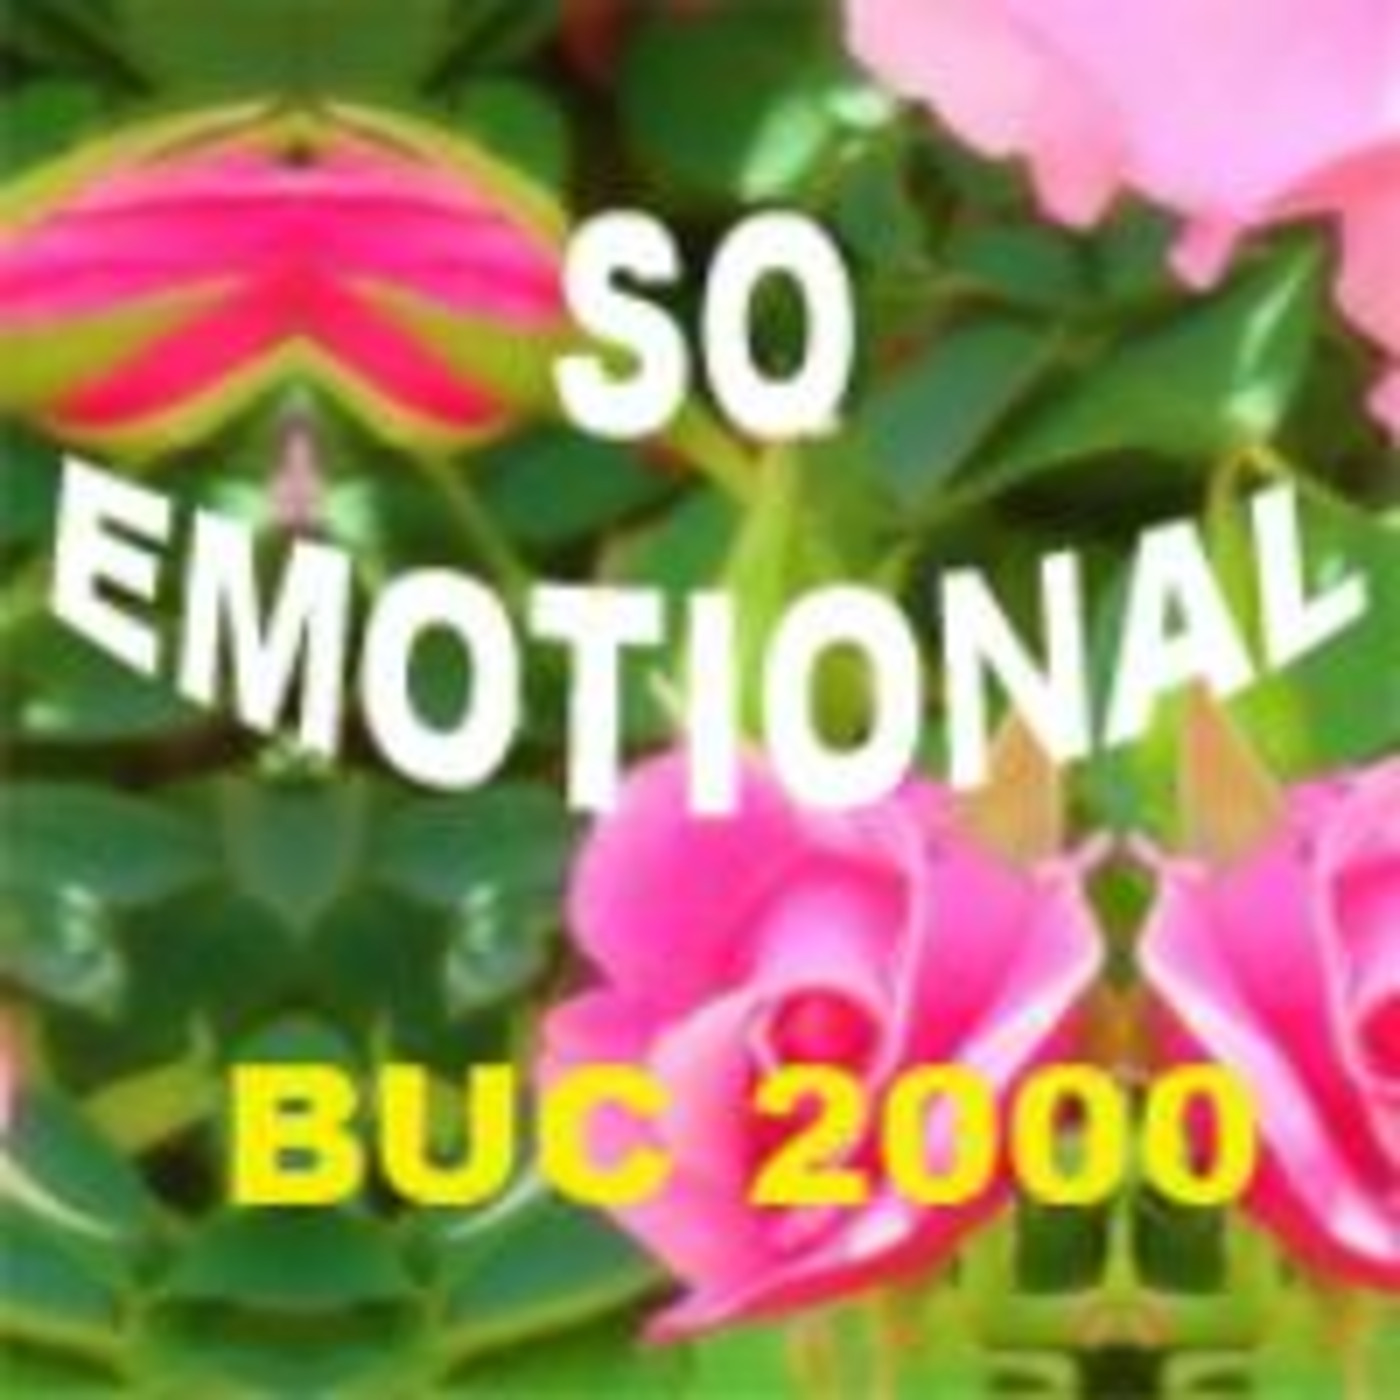 DJ Buc_So Emotional (2000) - Part 3